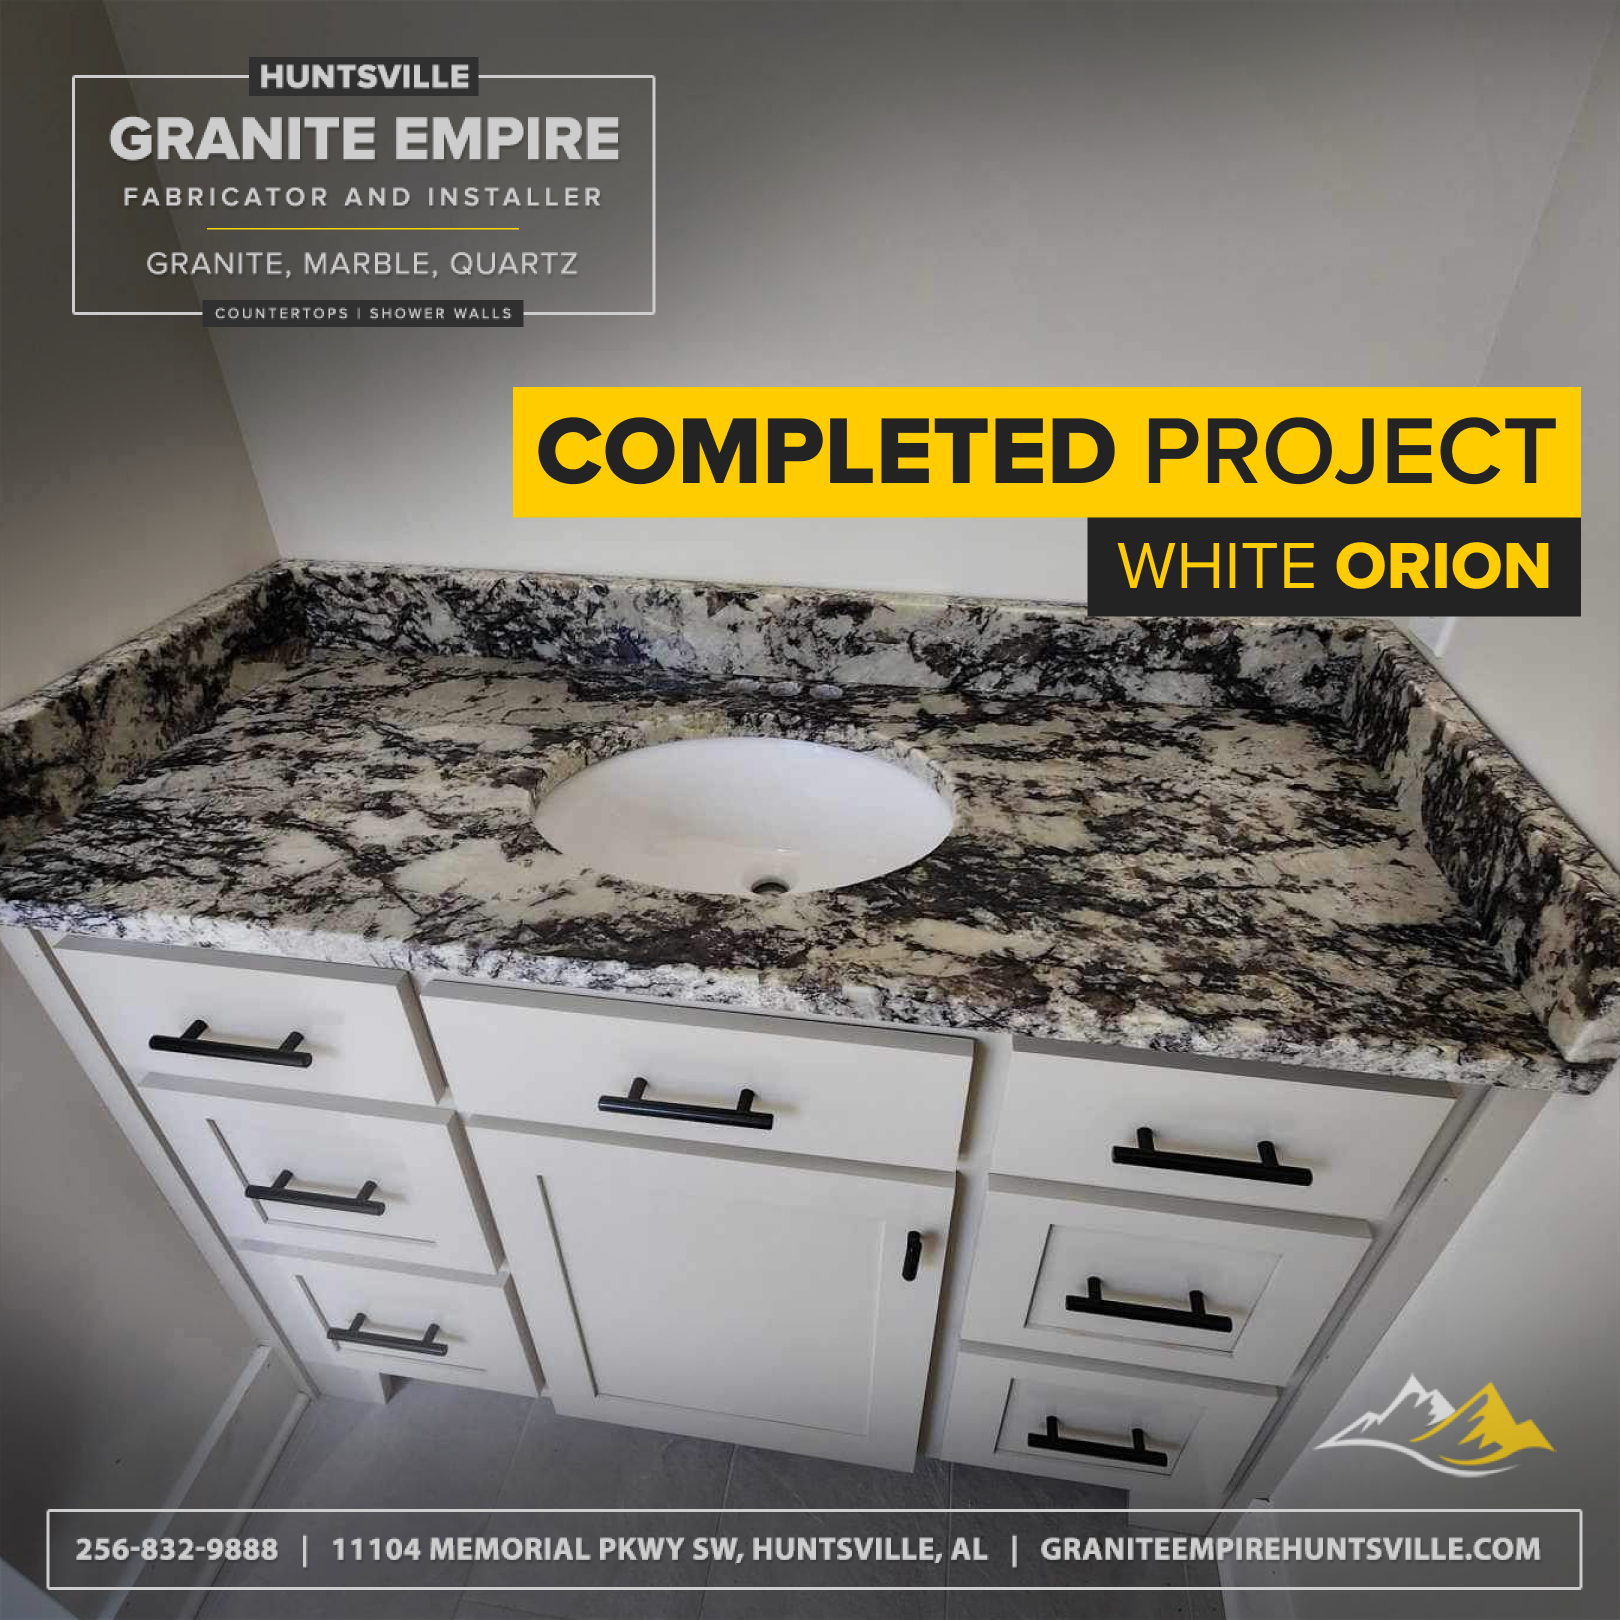 White Orion: The Star of Contemporary Countertop Design